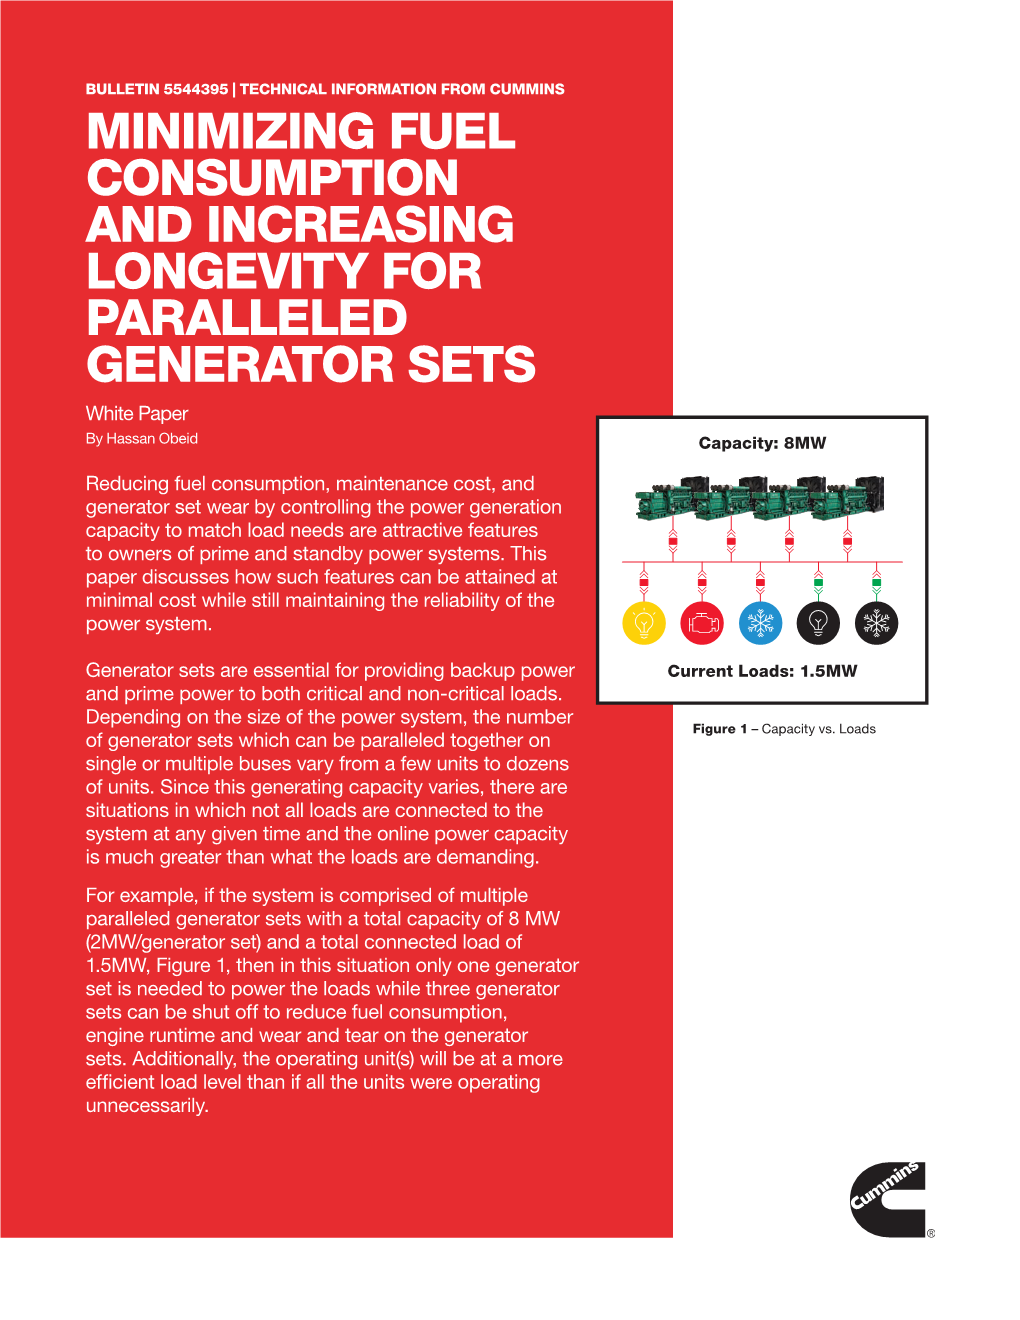 Load Demand for Paralleled Generator Sets